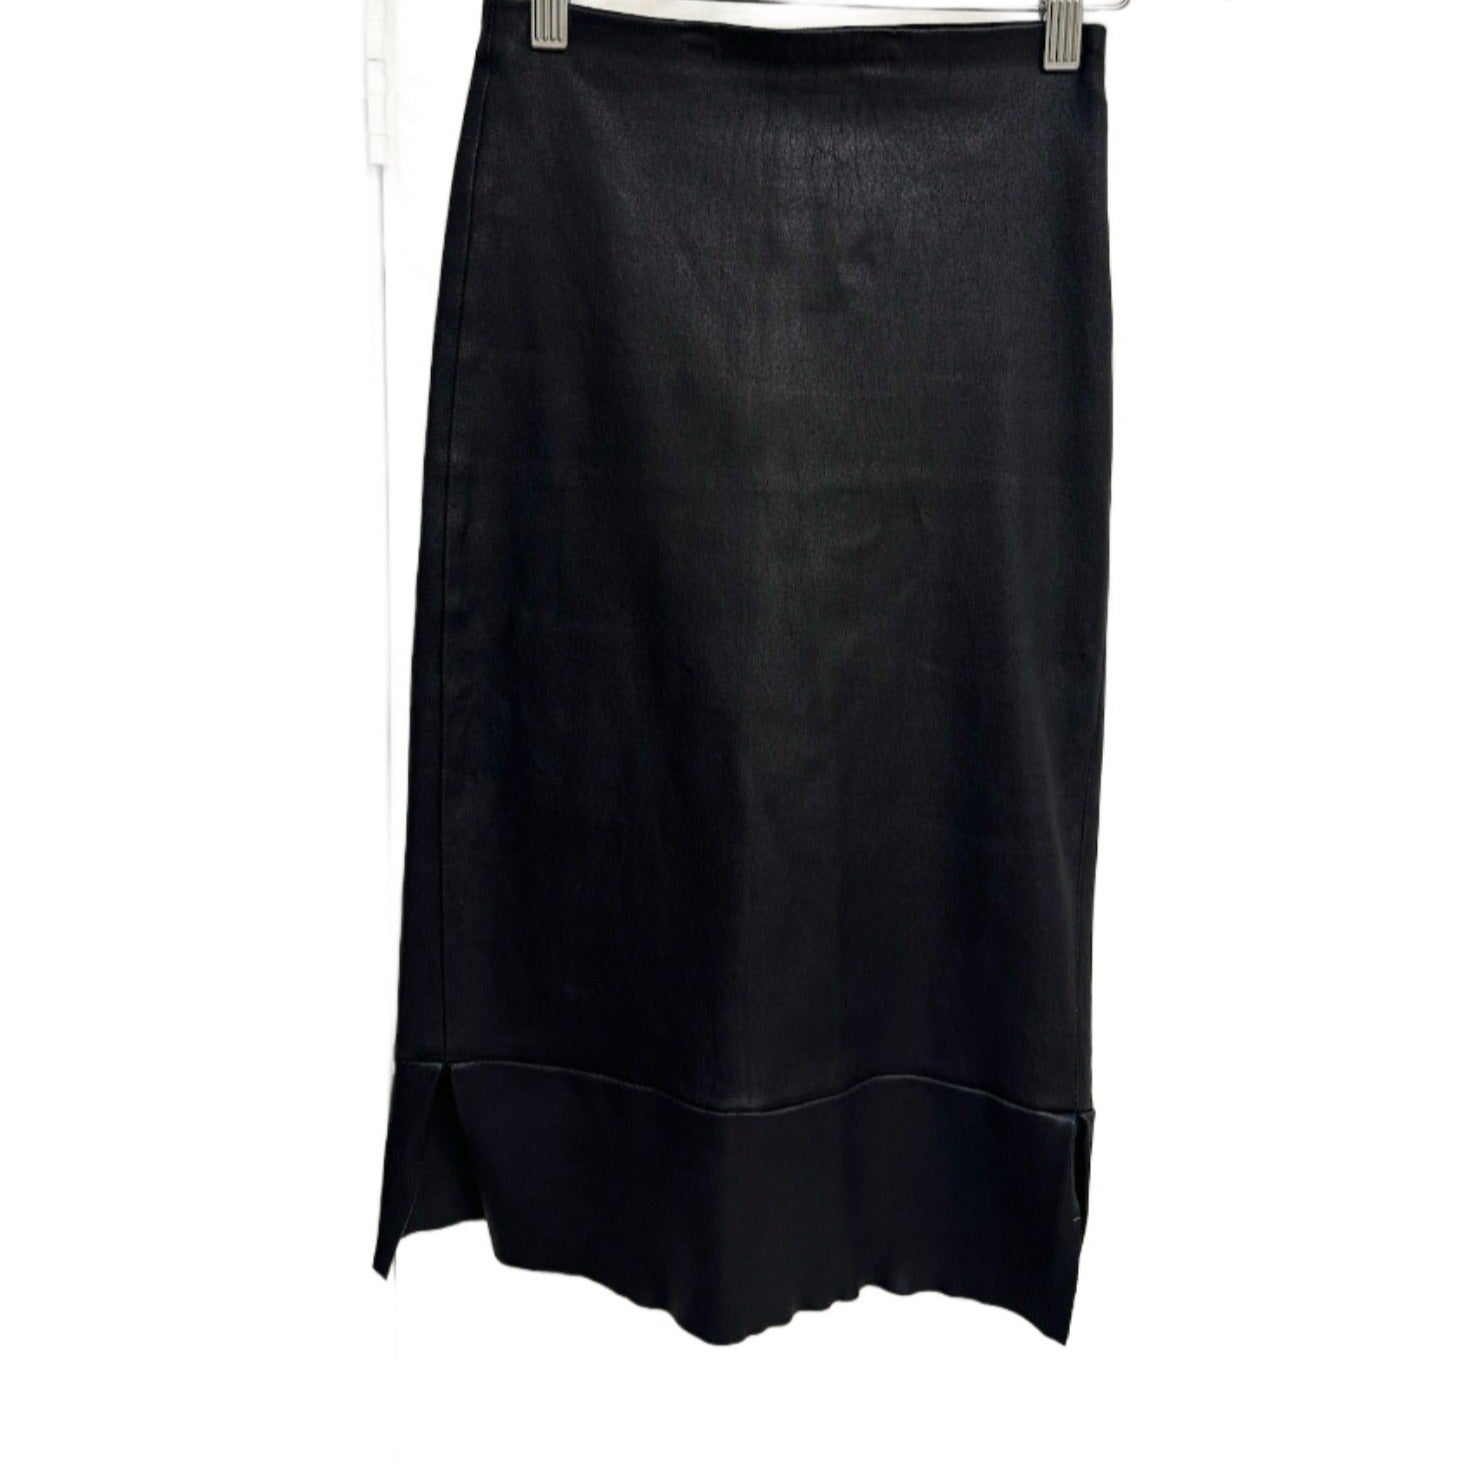 Scanlan Theodore Black Leather Skirt